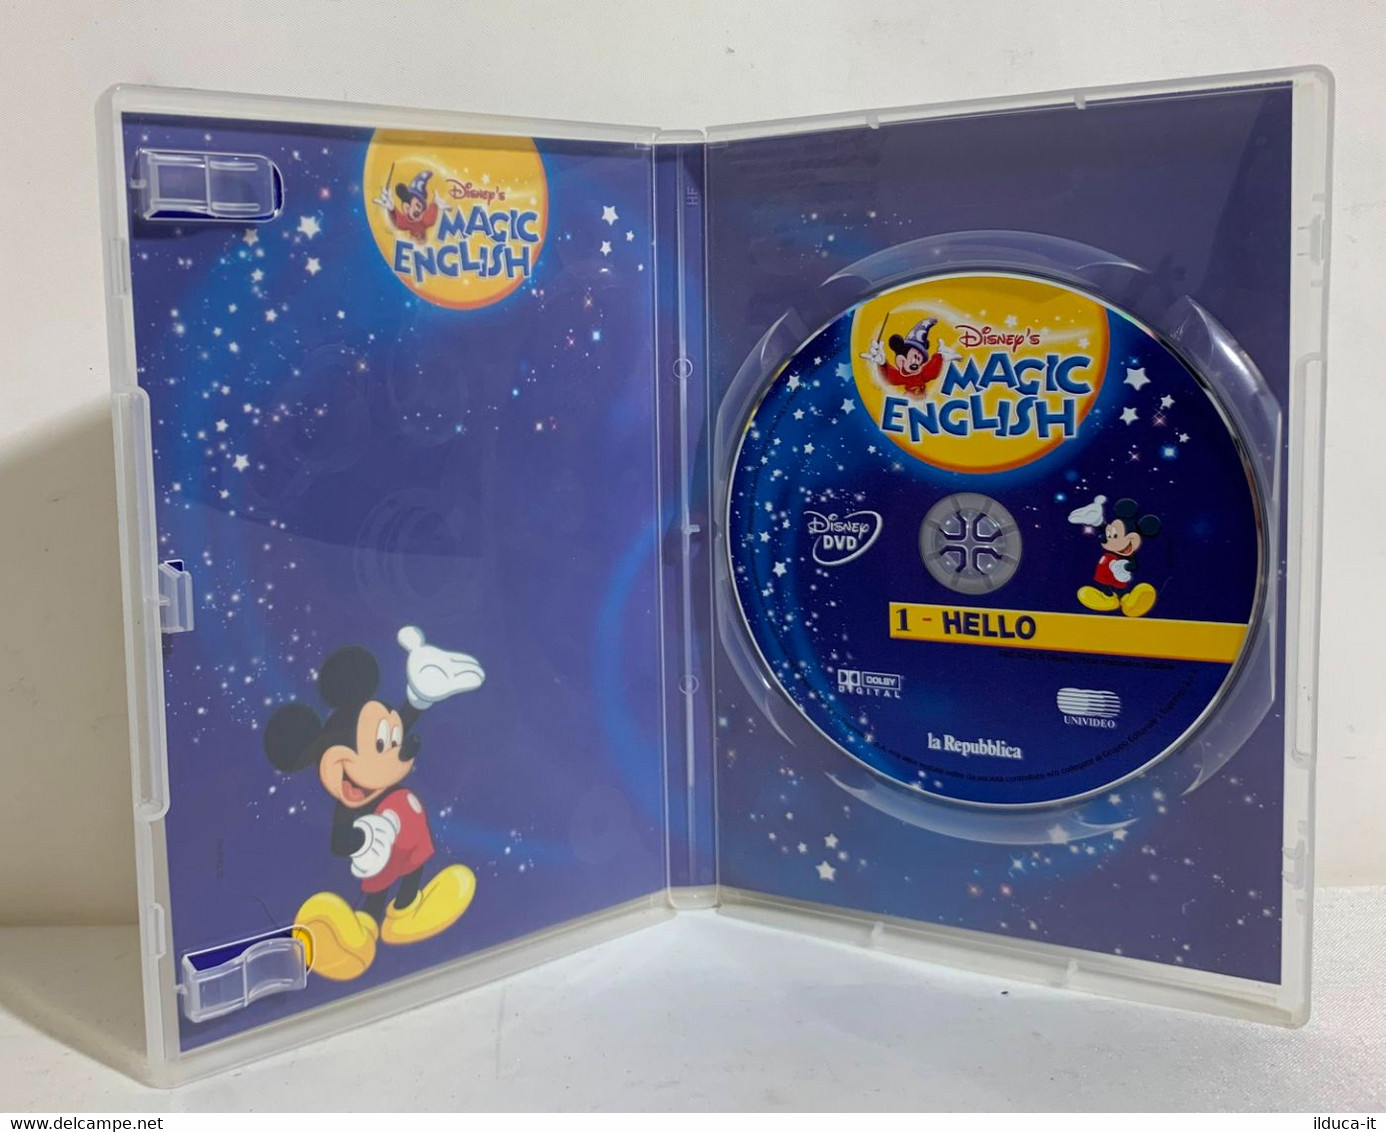 I102332 DVD - Disney's Magic English N. 1 - Hello - Animation